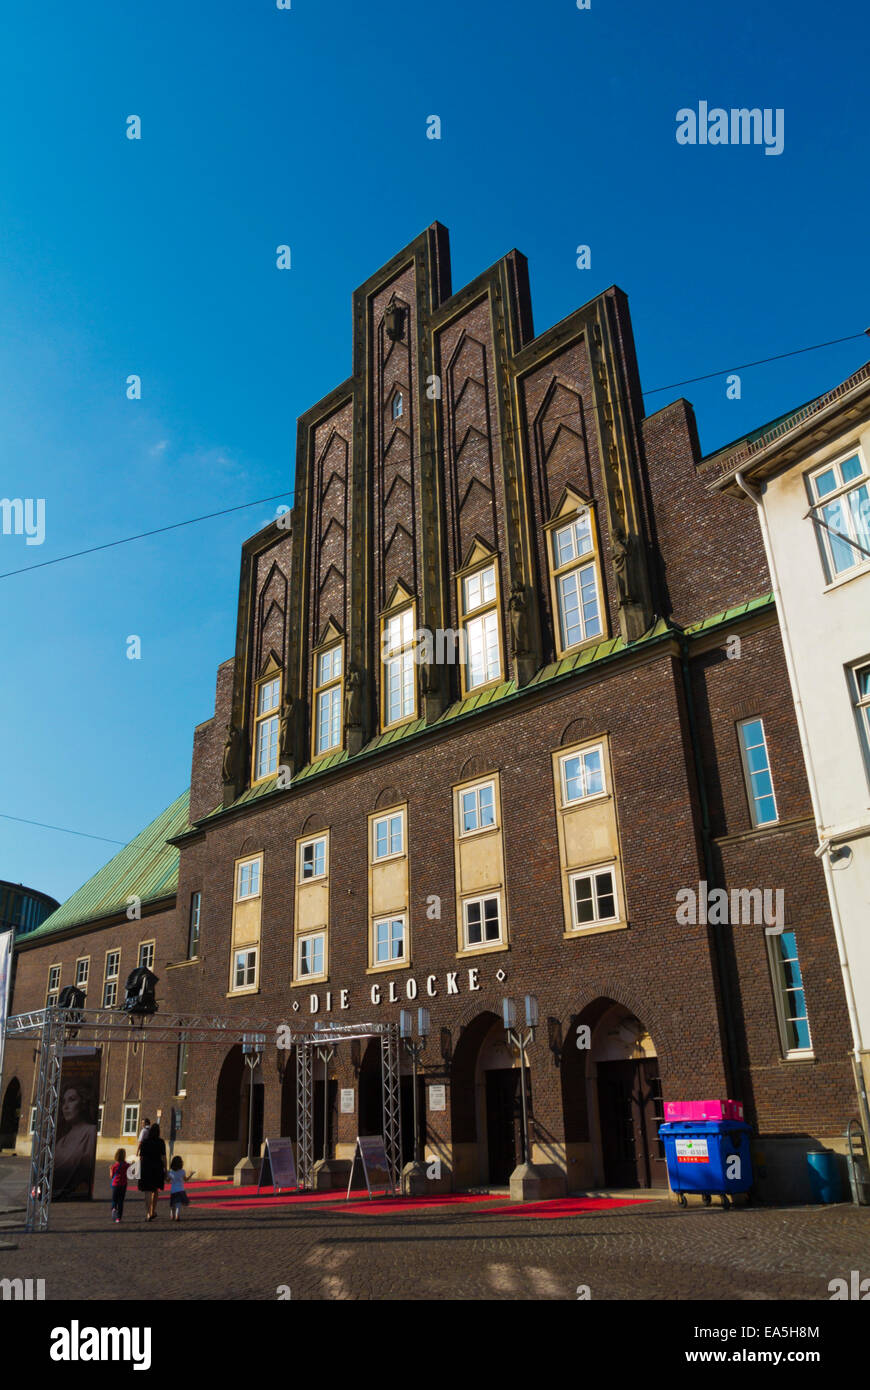 Die Glocke concert hall, Domsheide square, Altstadt, old town, Bremen, Germany Stock Photo